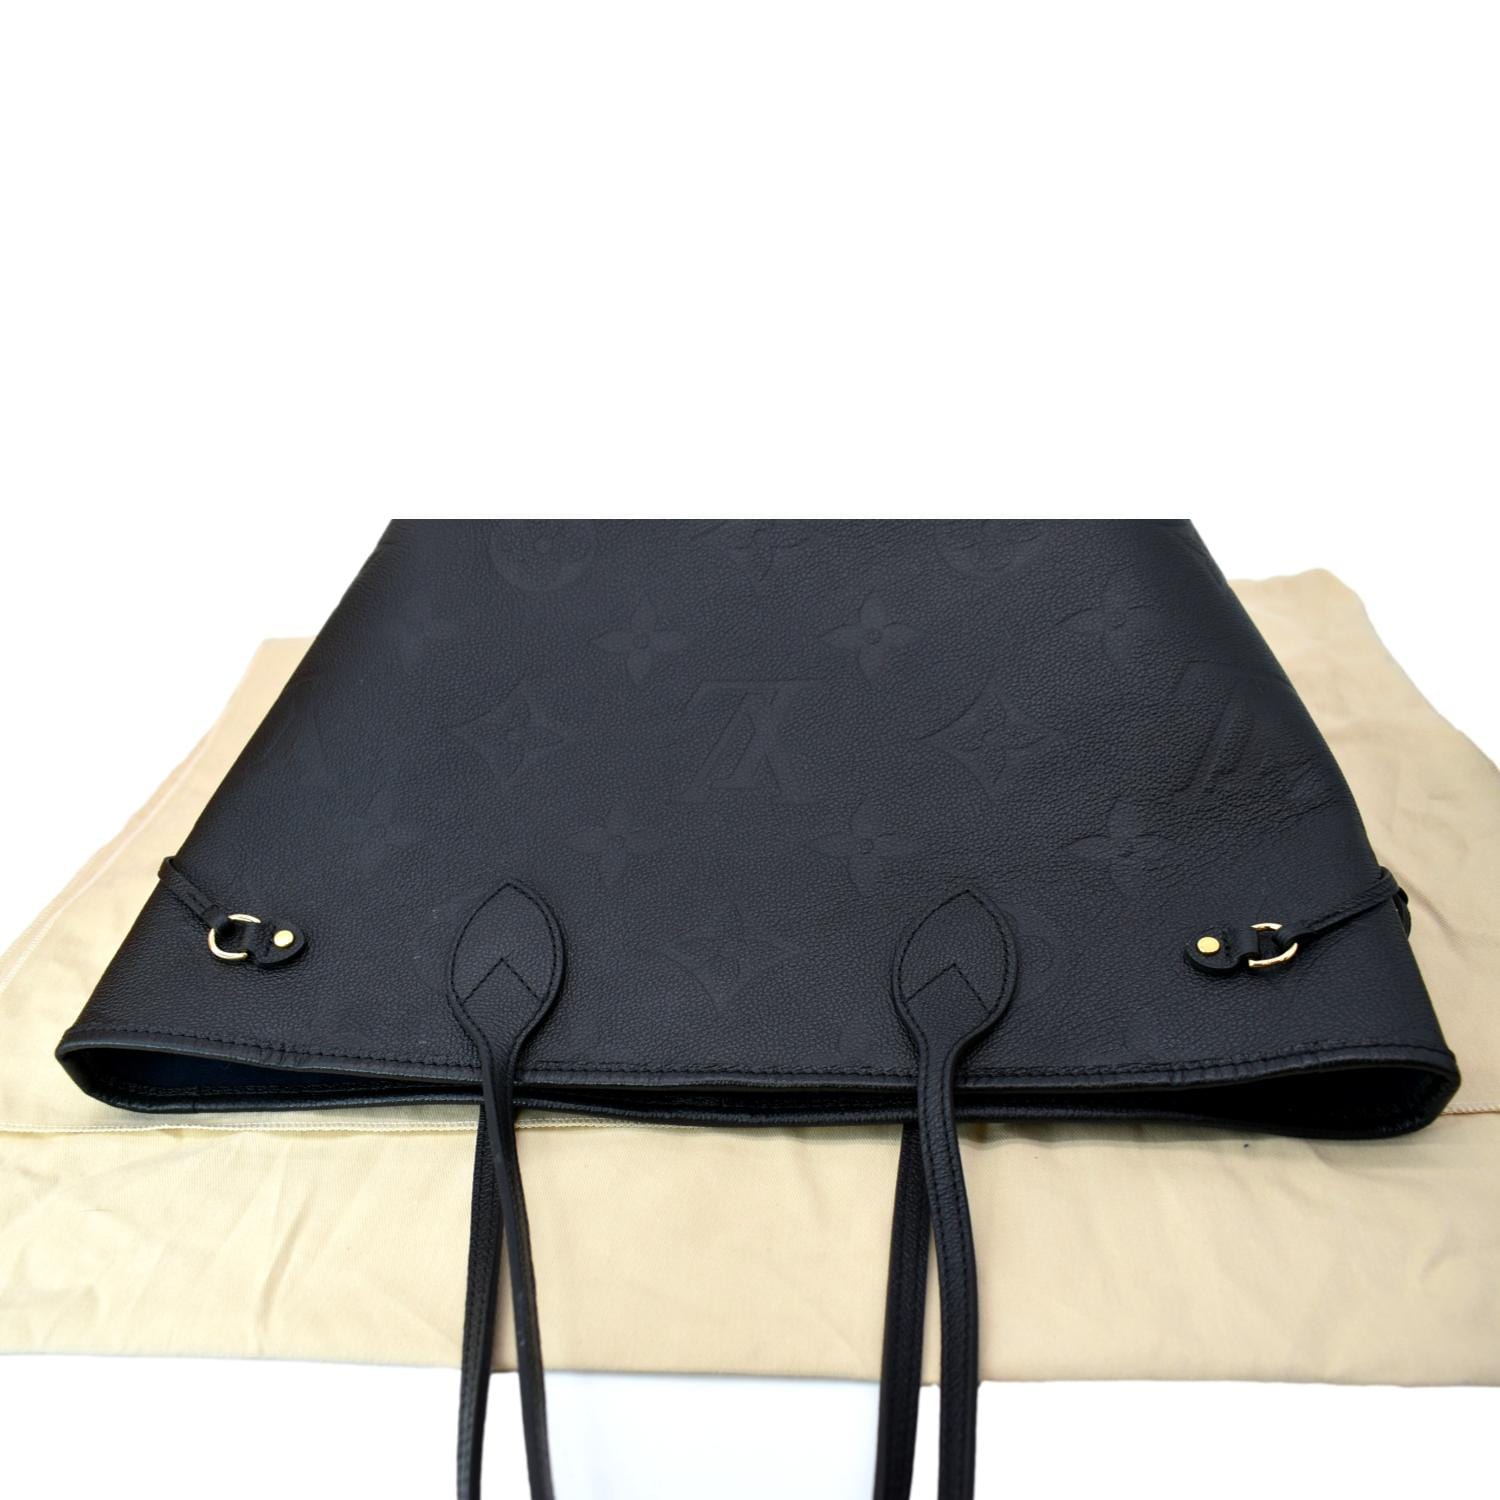 Neverfull MM Monogram Empreinte Leather in Black - Handbags M45685, LOUIS  VUITTON ®